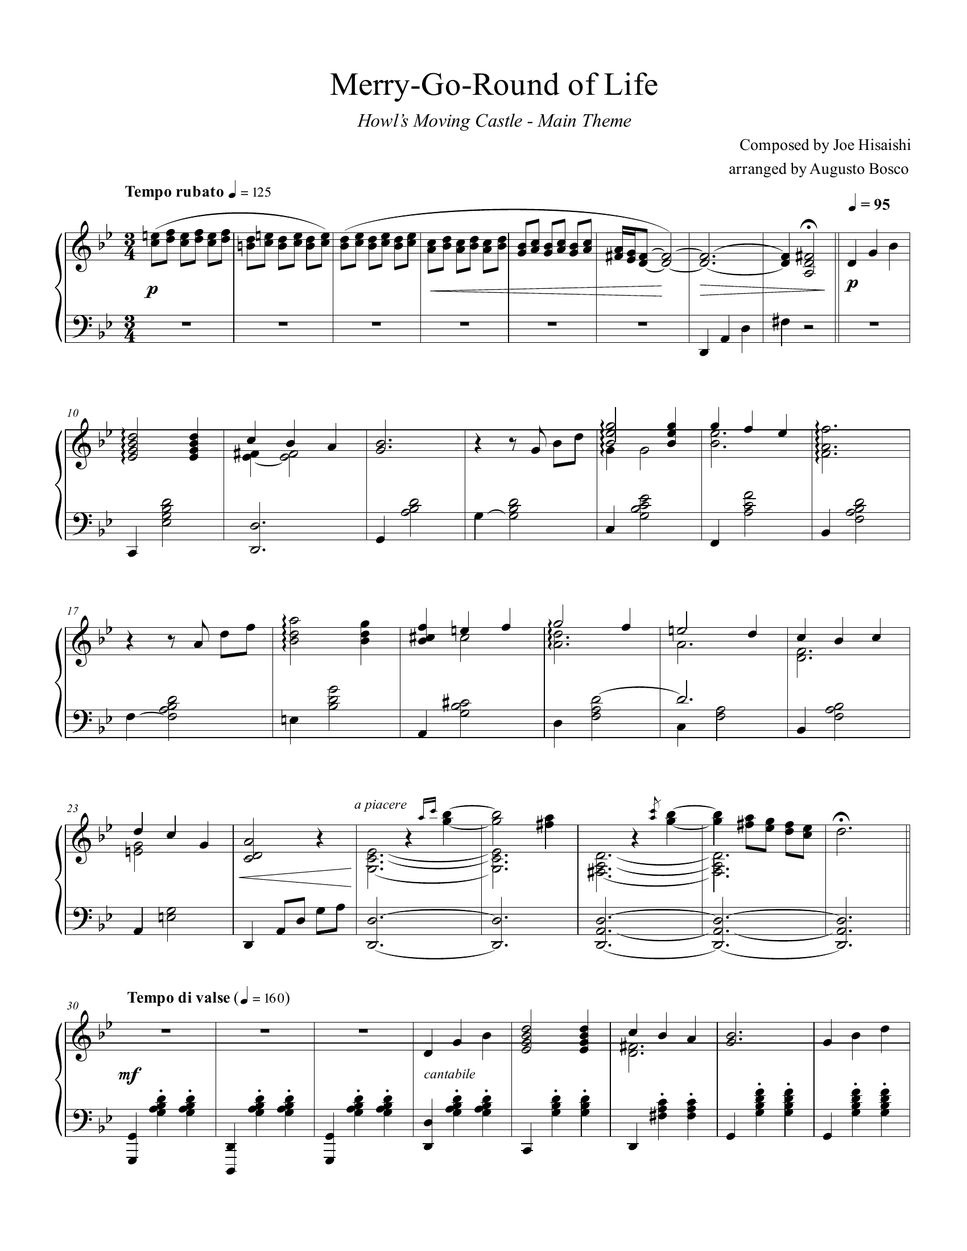 Джои Хисаиши Merry-go-Round of Life на фортепиано. Joe Hisaishi Merry go Round of Life Piano Sheet Music. Merry go round joe hisaishi